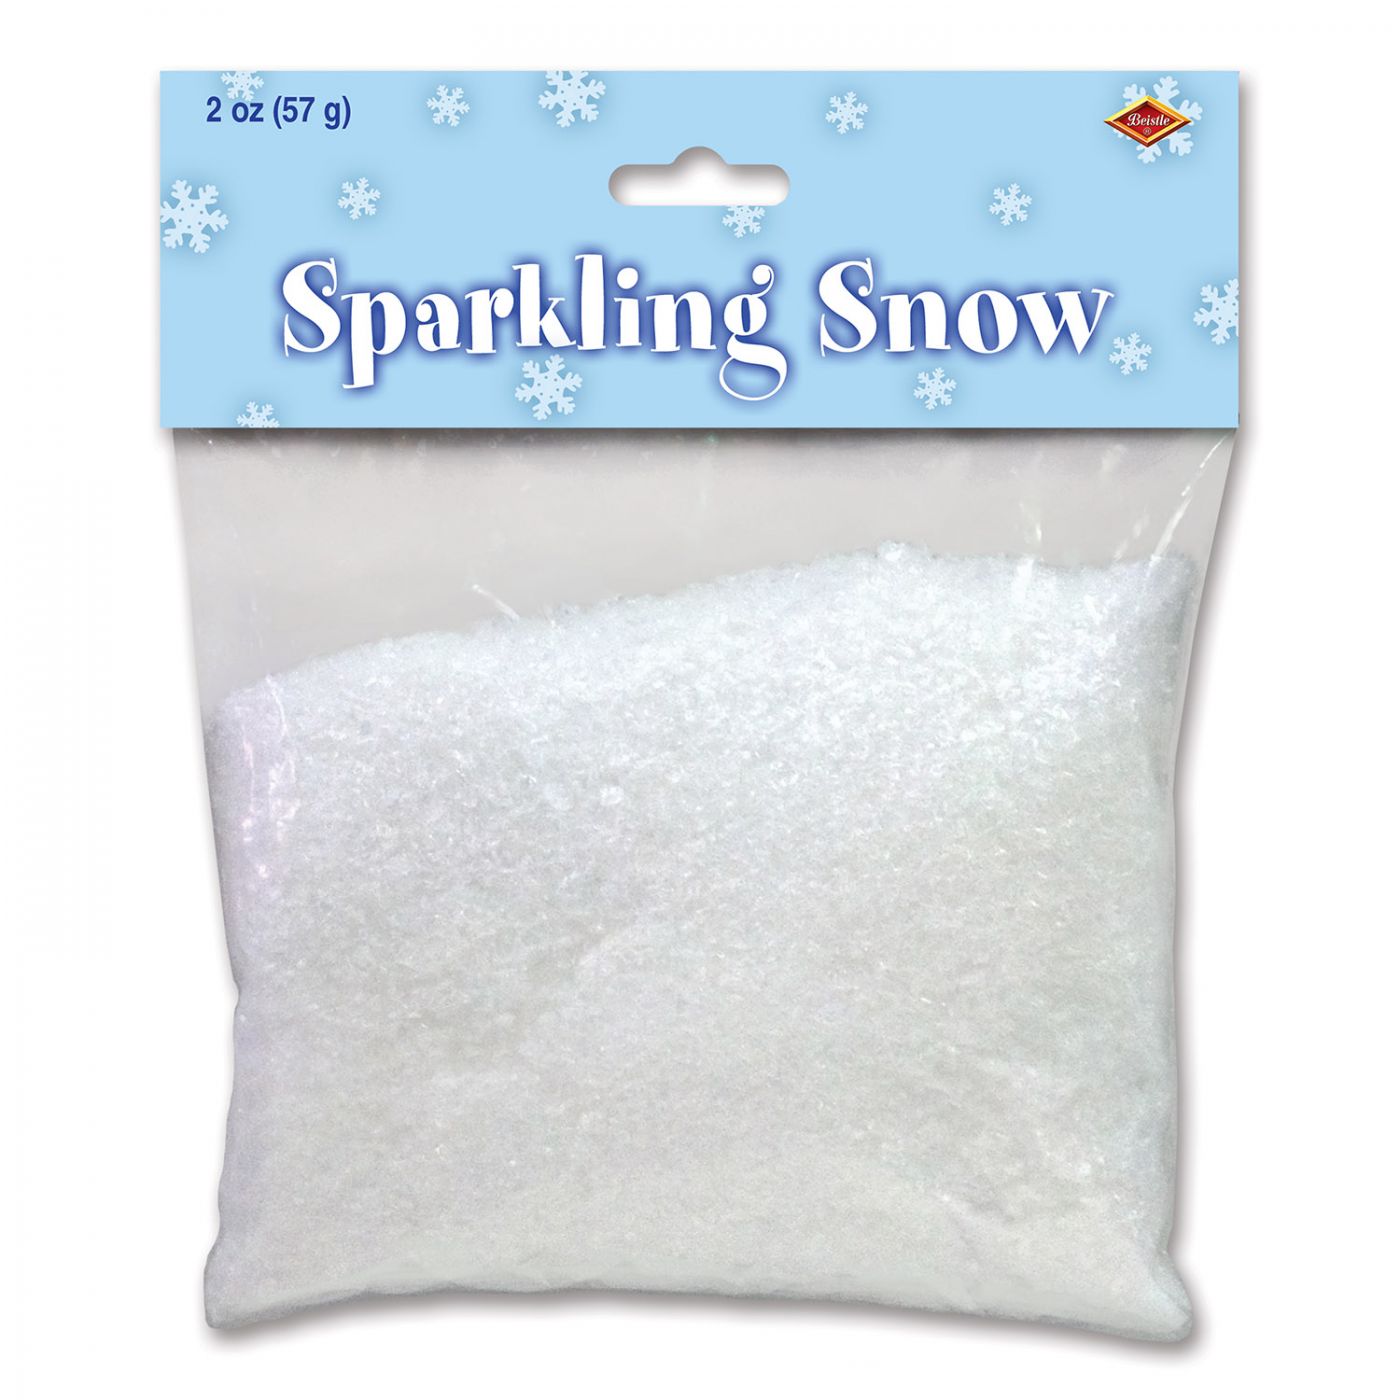 Sparkling Snow (12) image